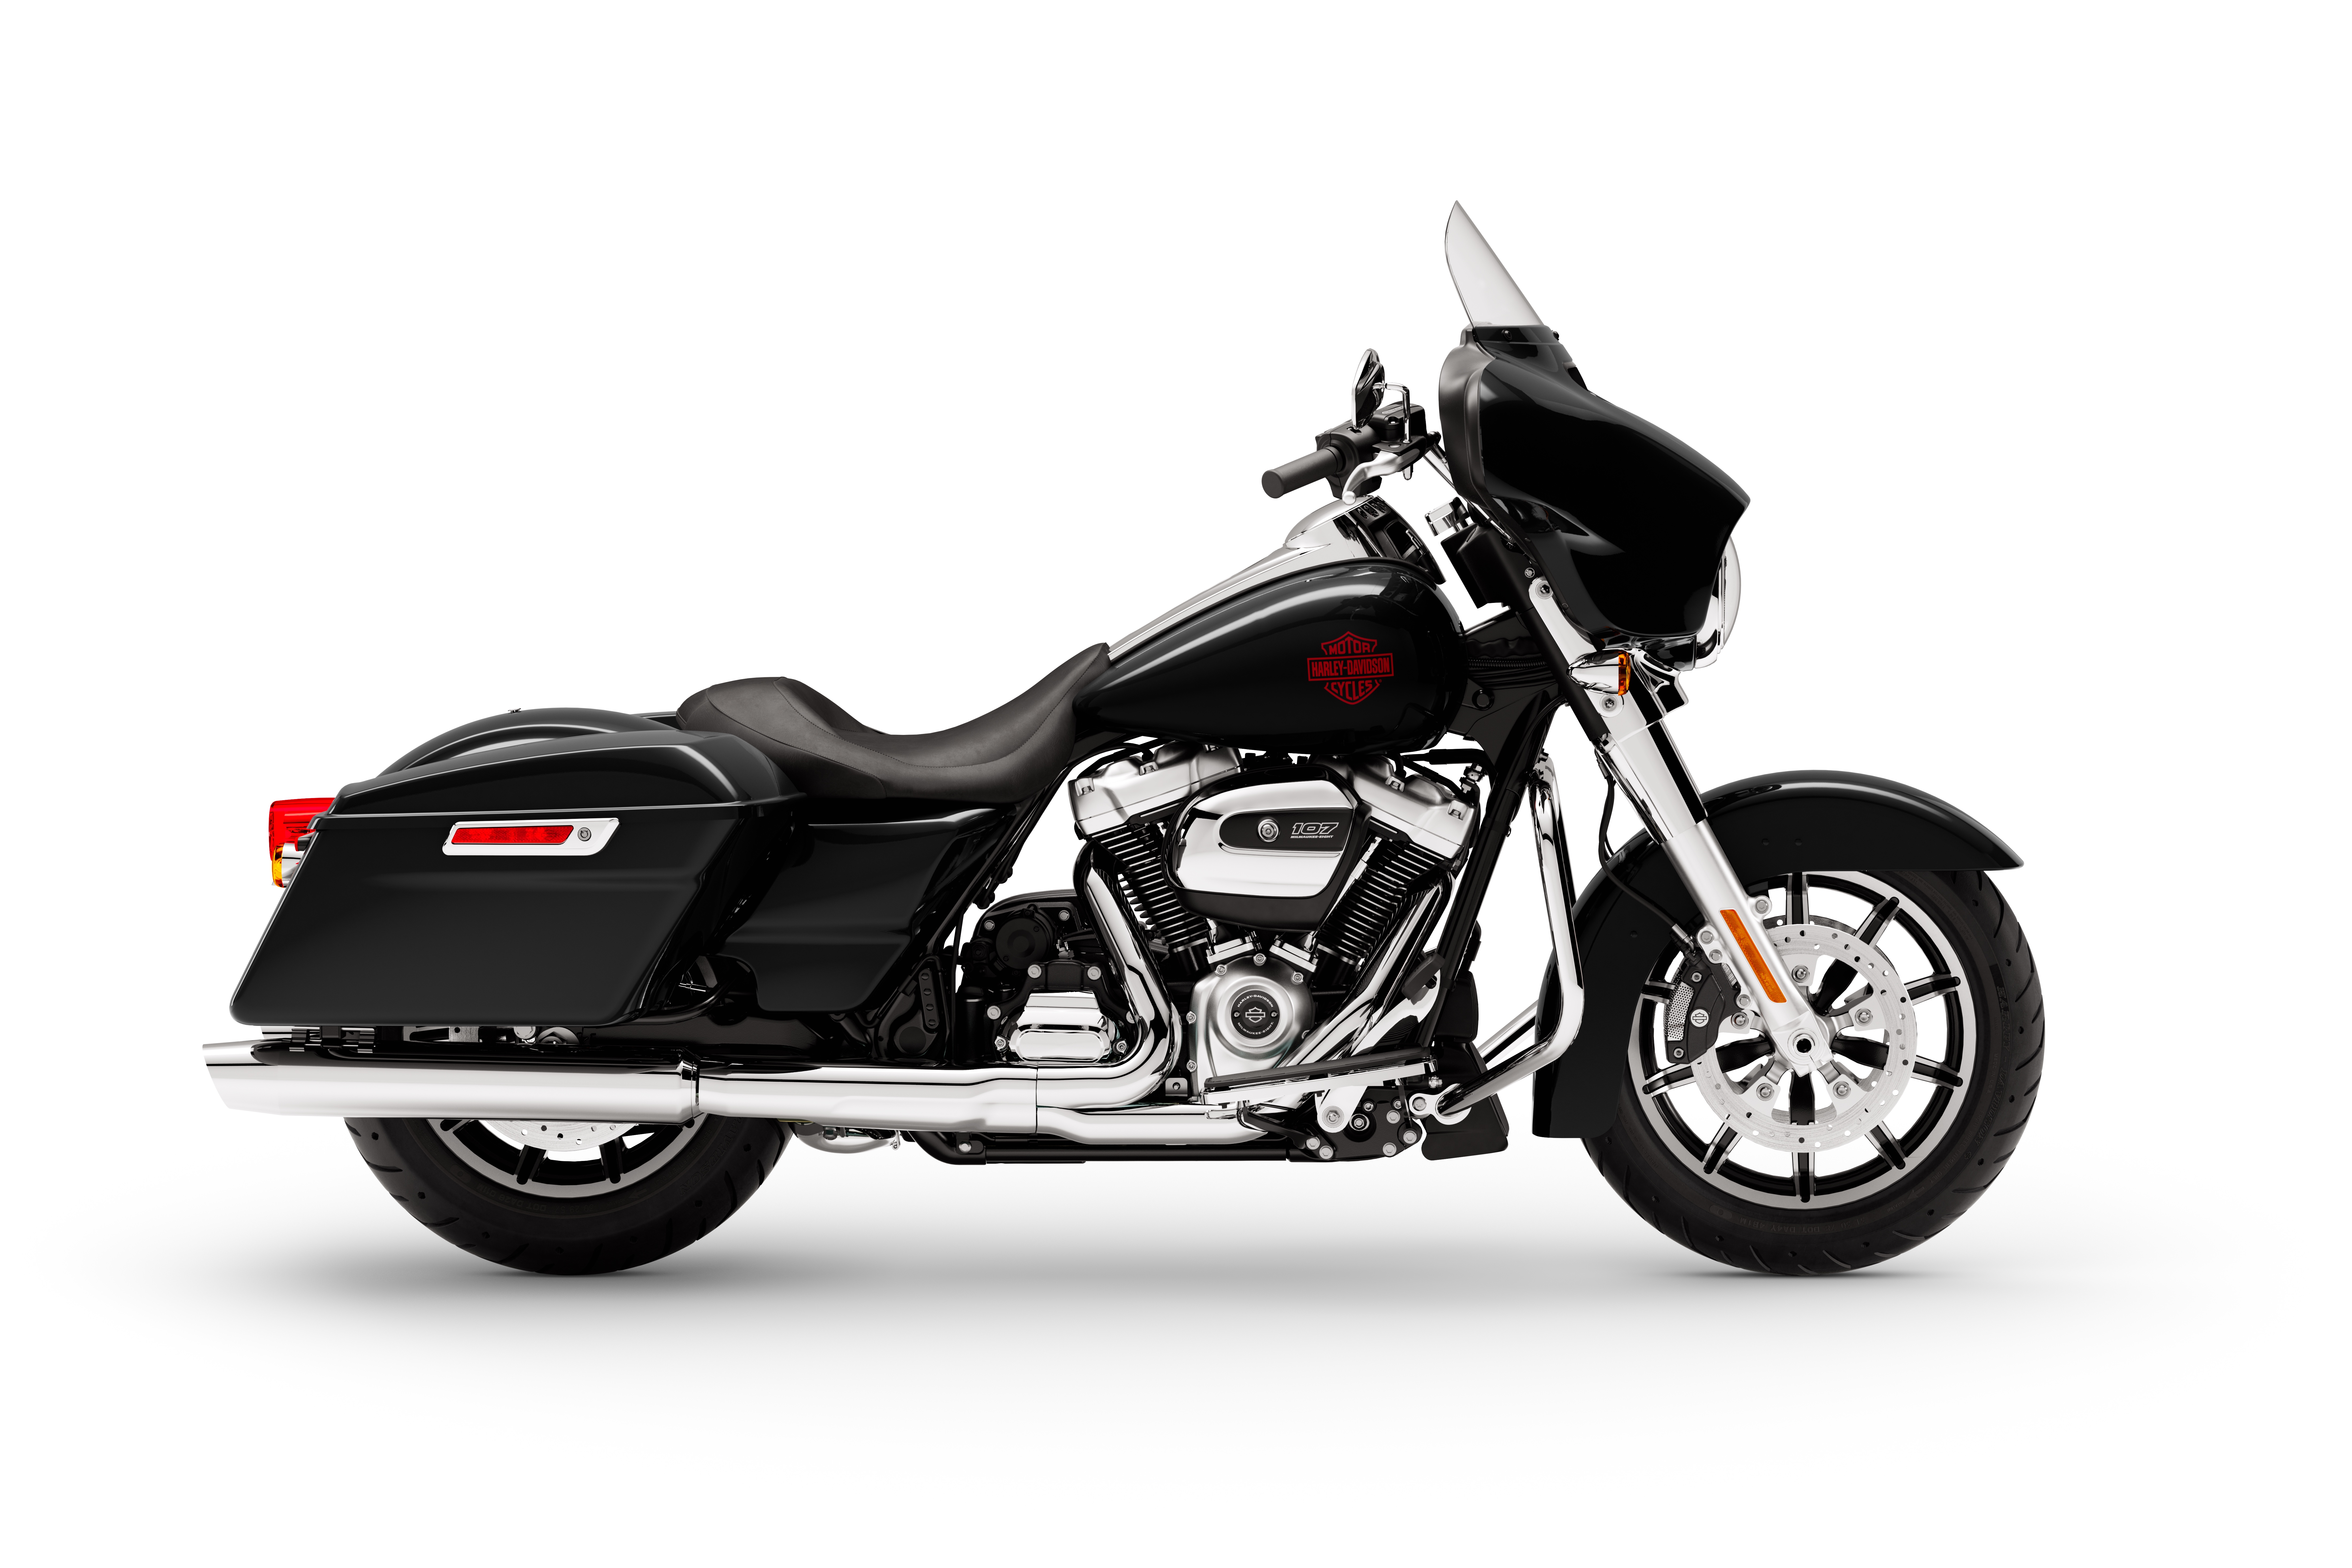 2020 Harley-Davidson Electra Glide Standard Buyer's Guide: Specs, Photos,  Price